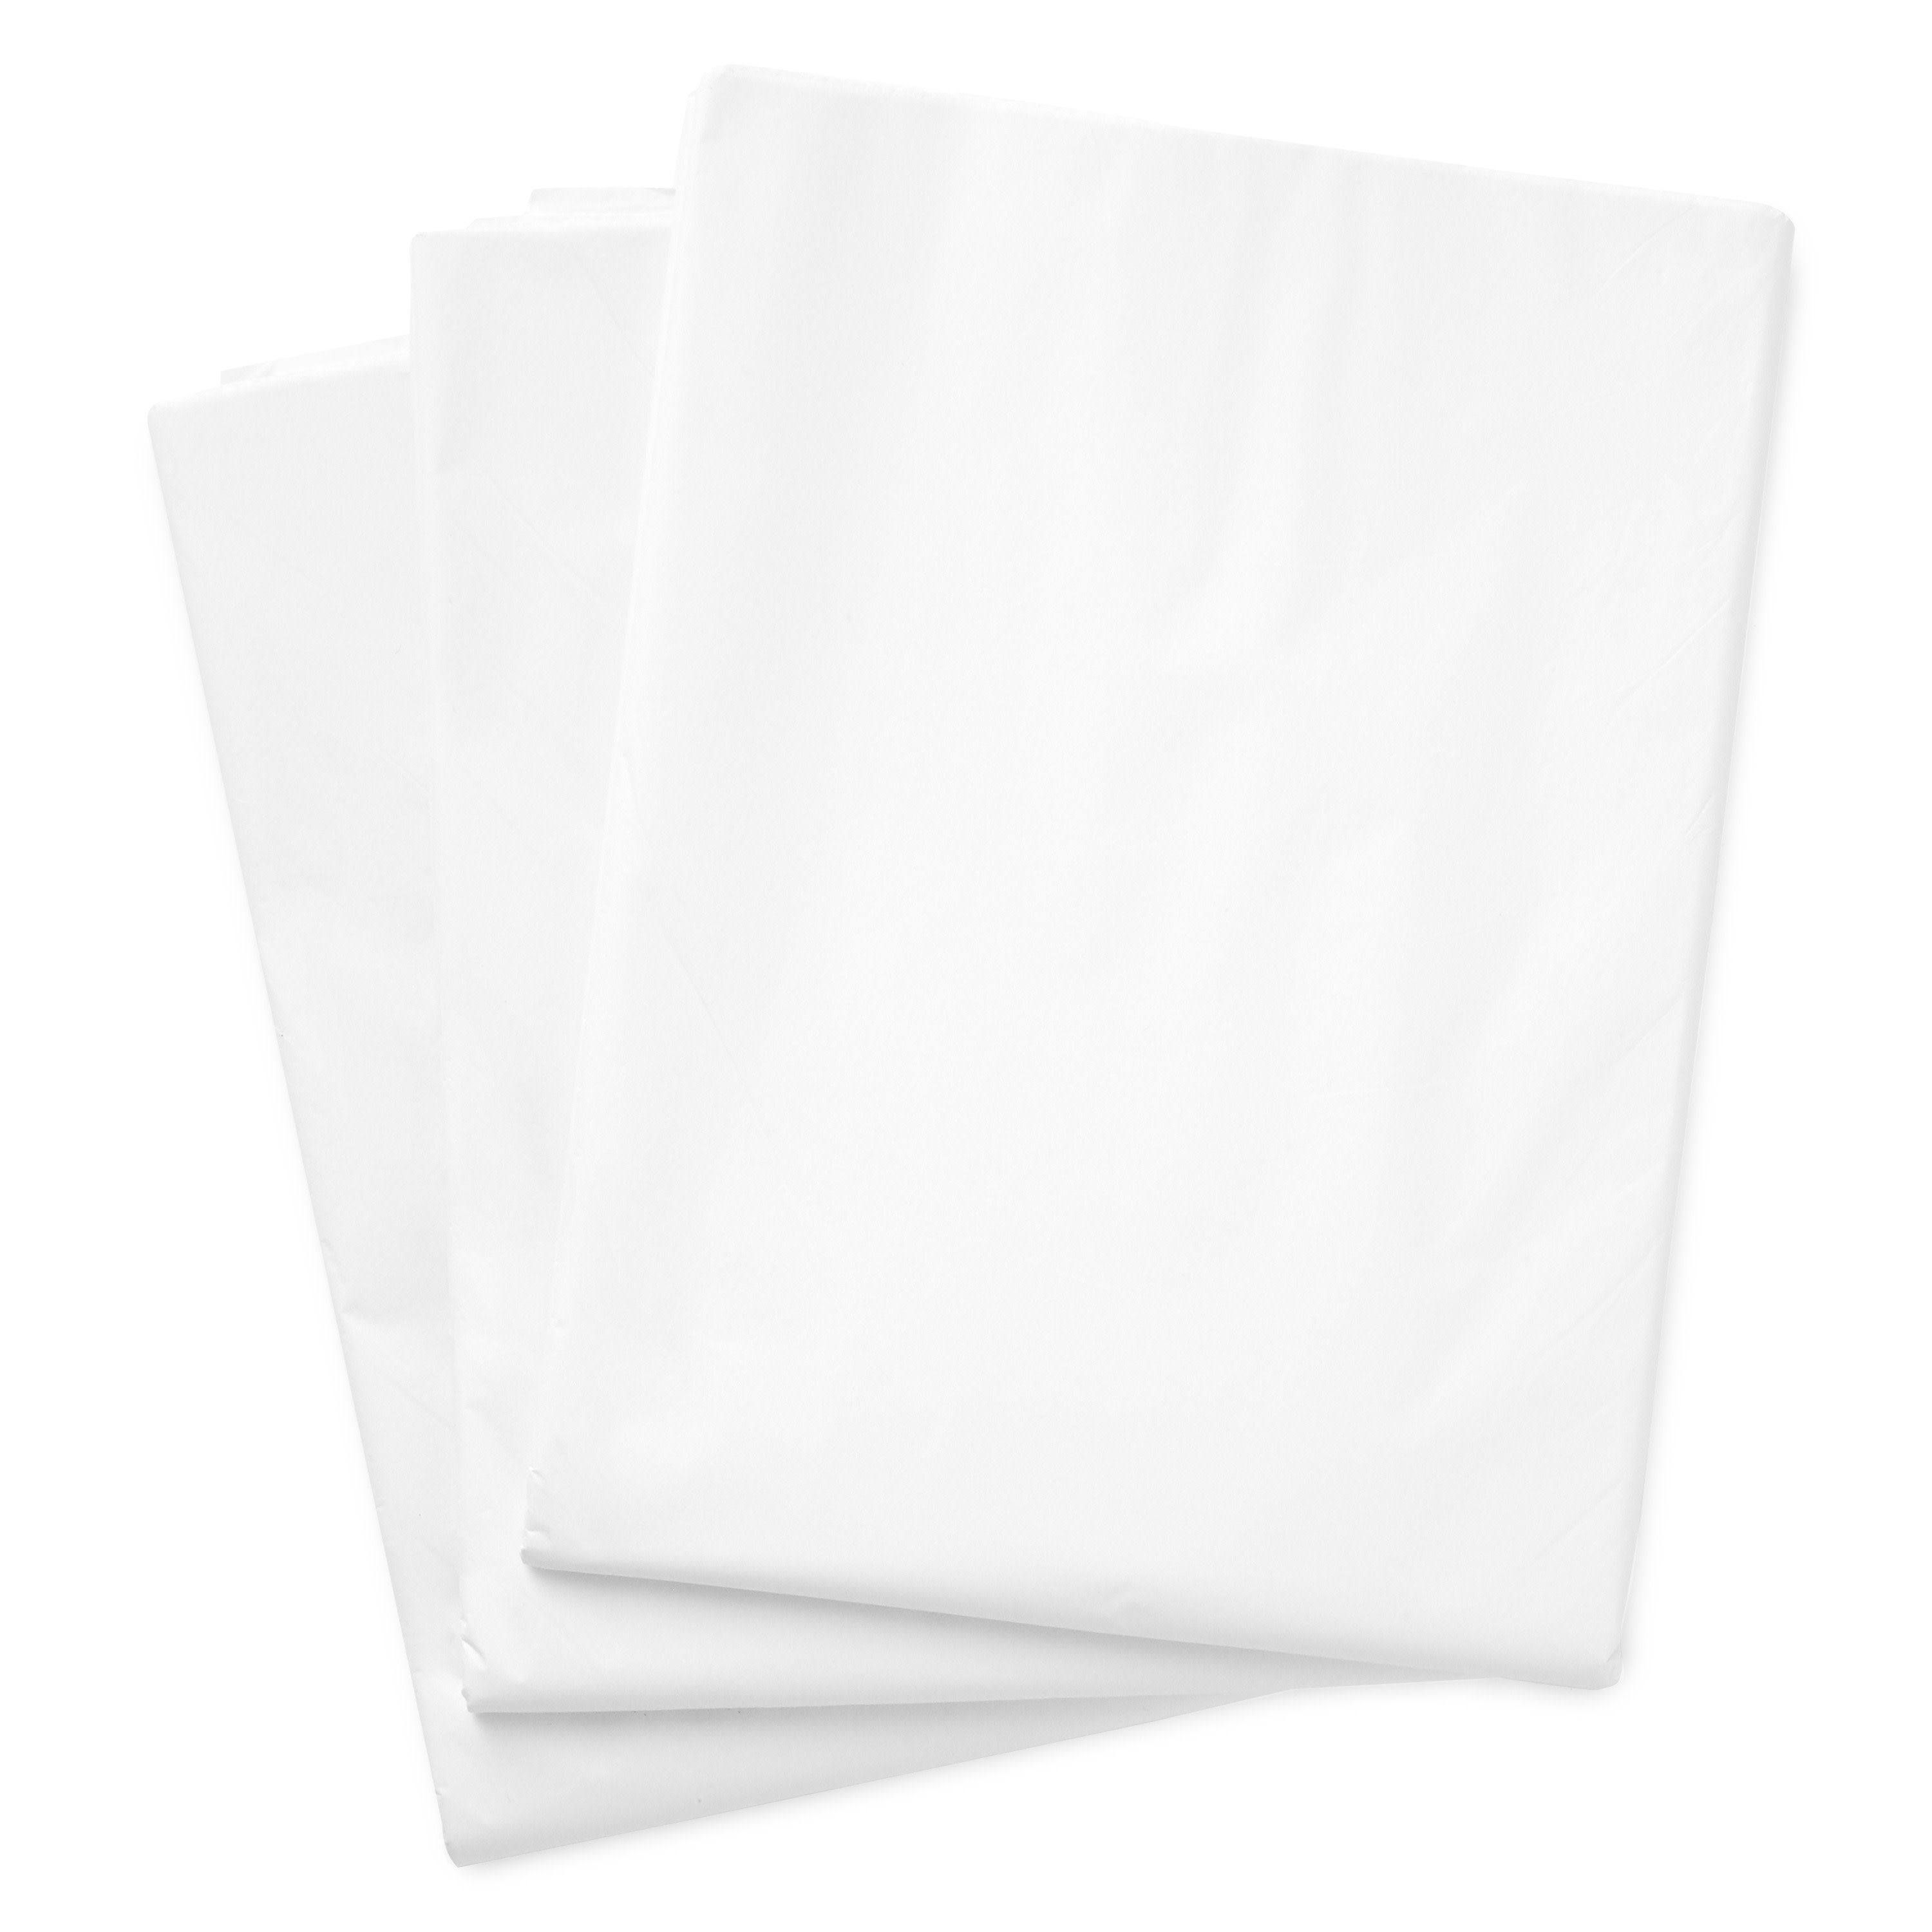 Hallmark Bulk White Tissue Paper (100 Sheets) for Birthdays, Christmas, Graduations, Gift Wrap, Crafts, DIY Paper Flowers, Tassel Garland, Gift Baskets